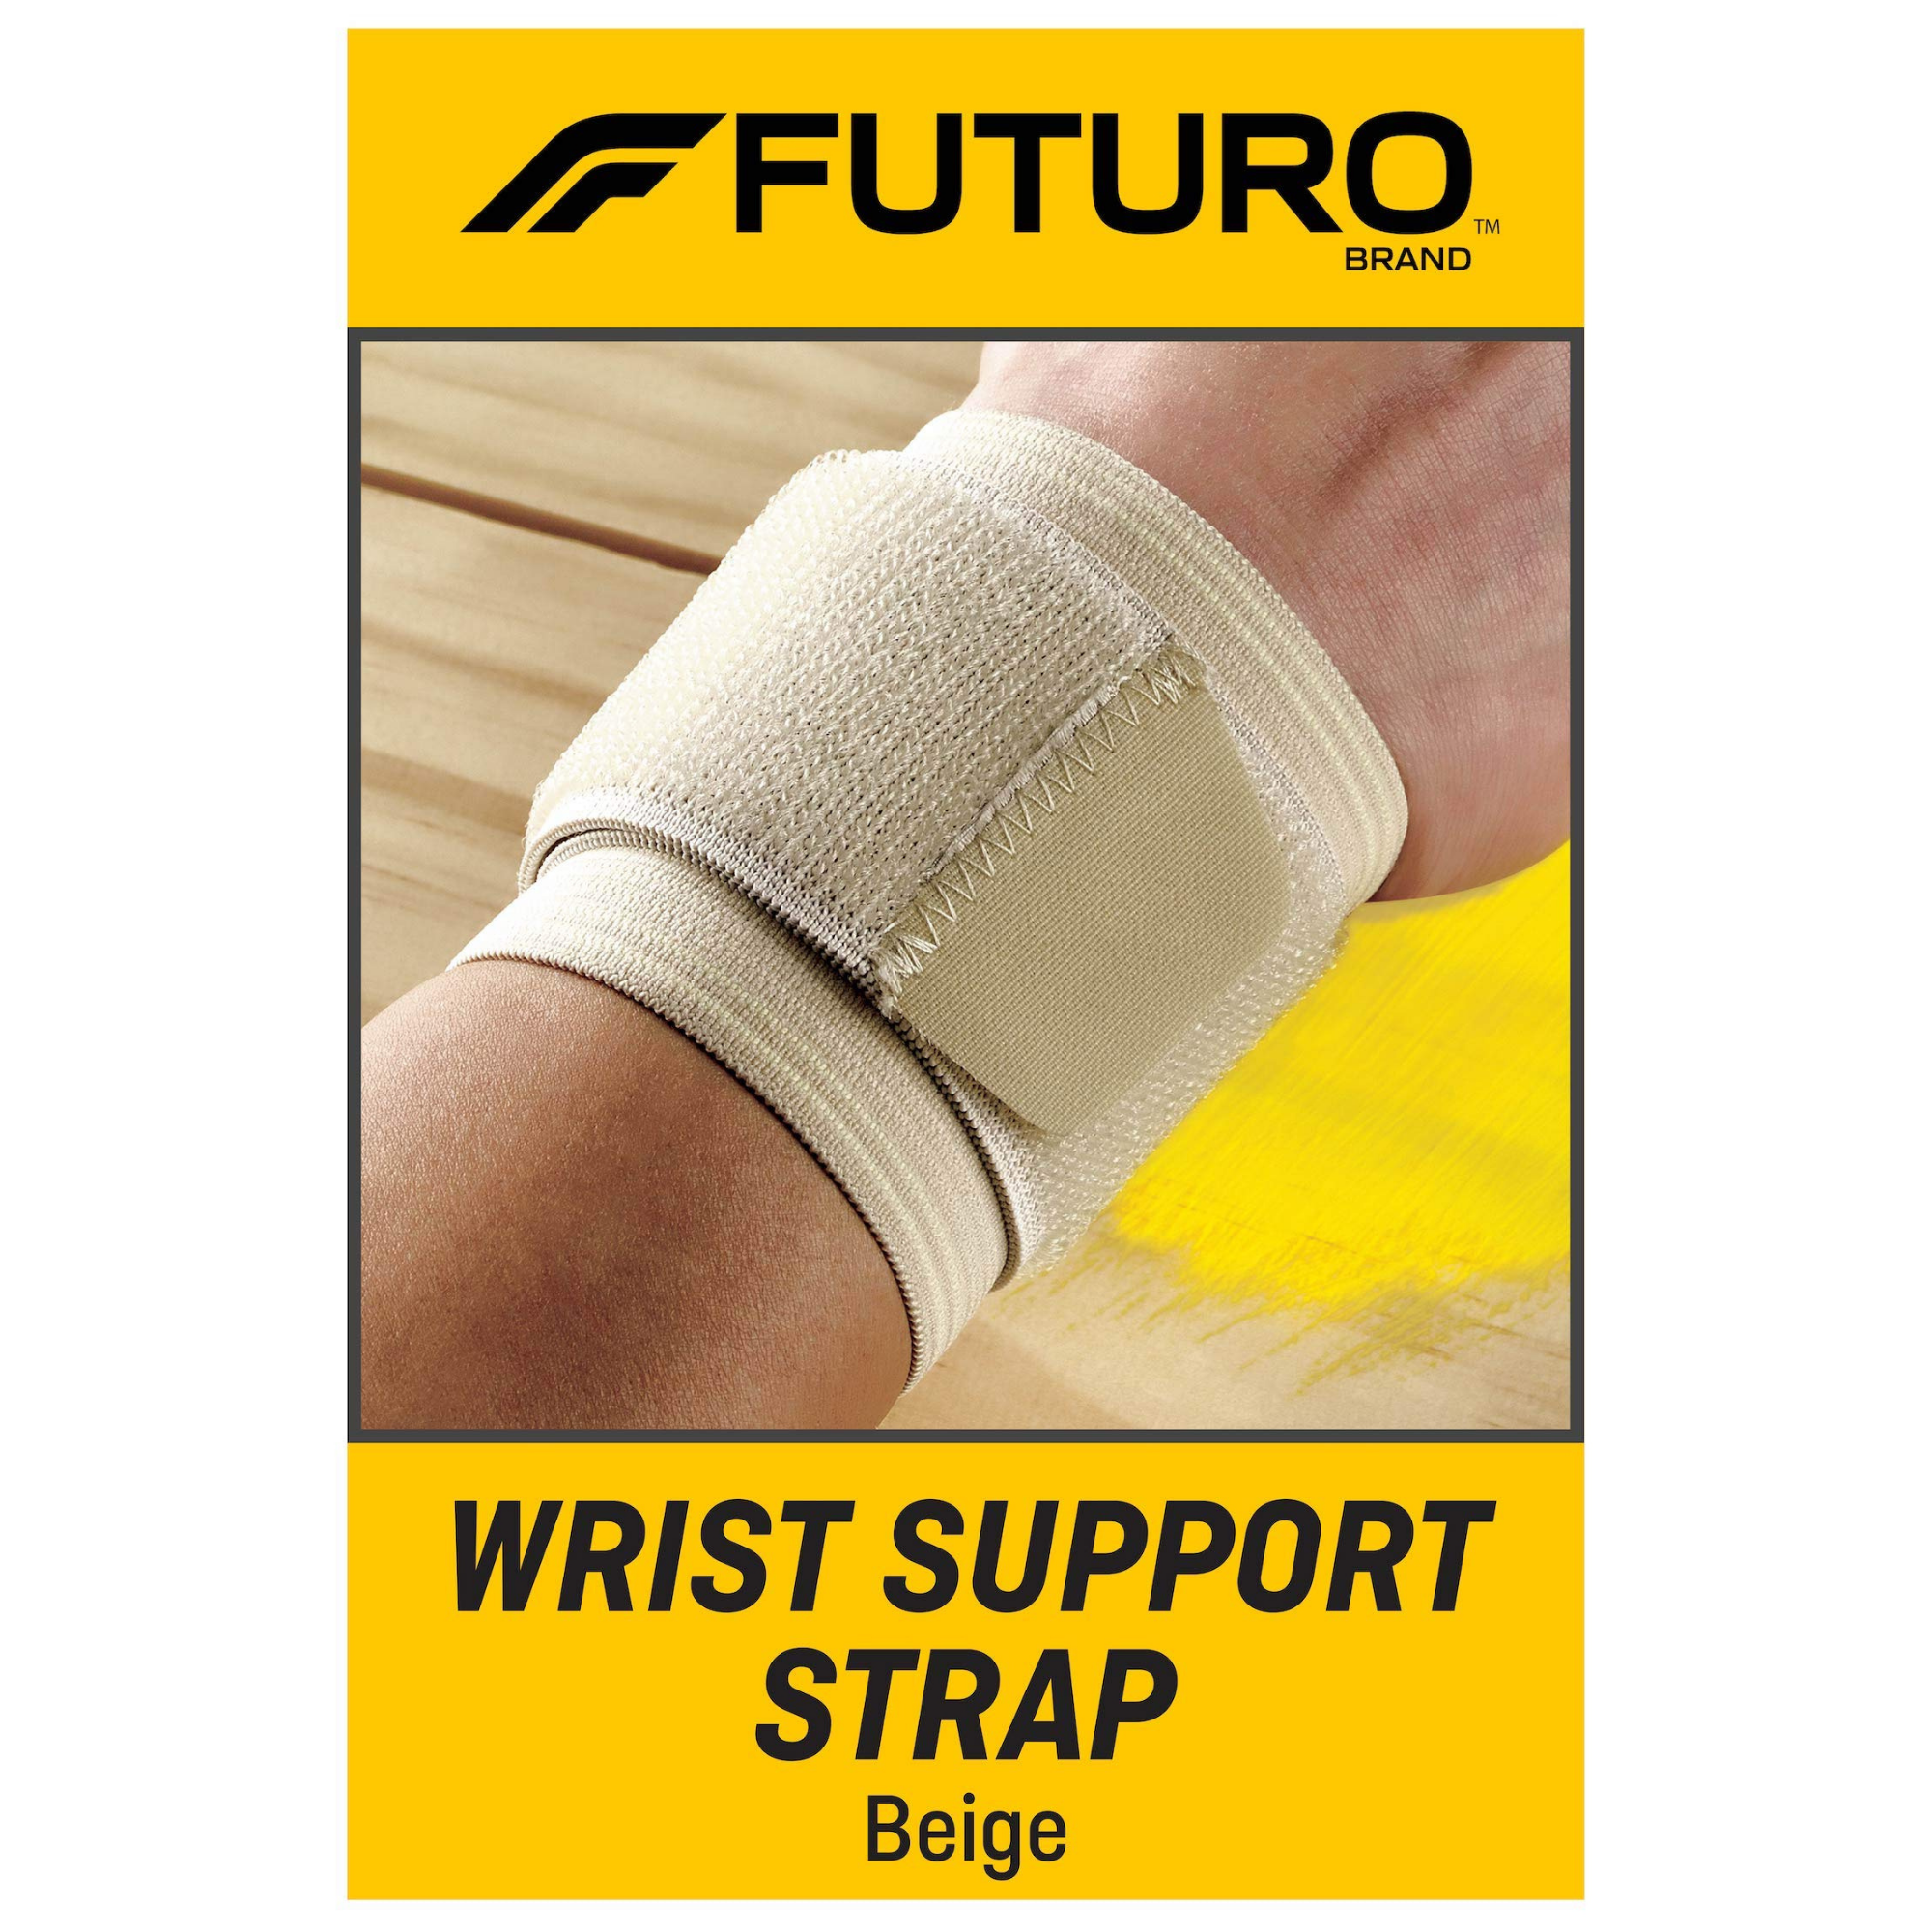 Futuro Wrist Support Strap 46709ENR Adjustable, Beige